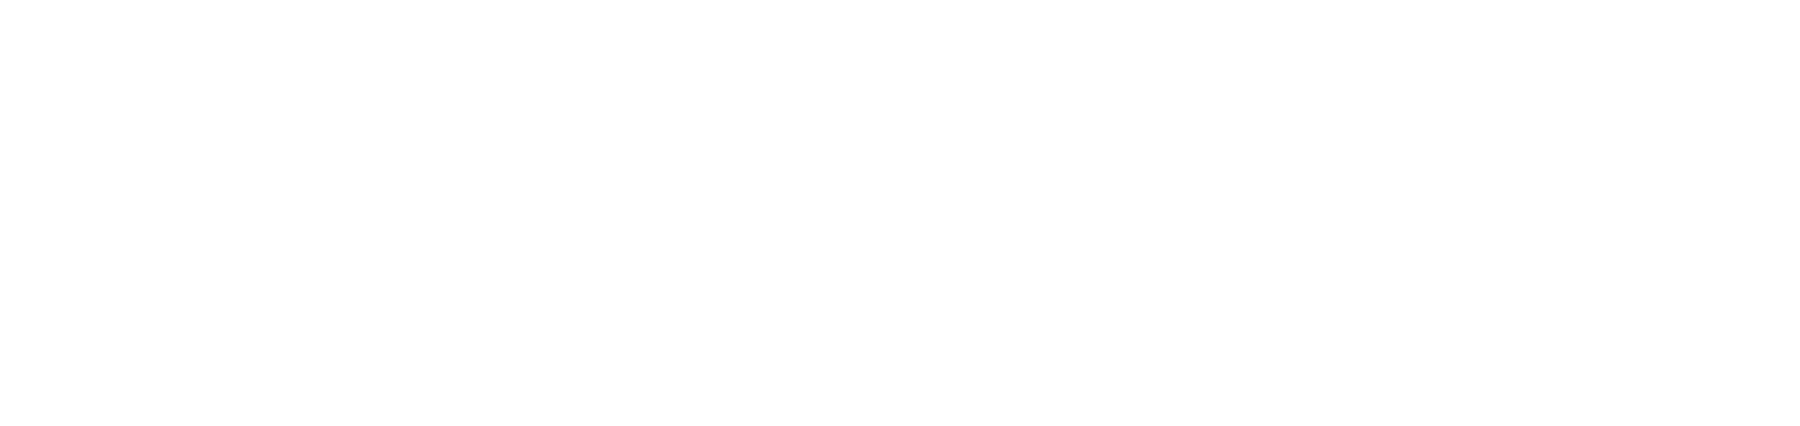 Pamlico Community College logo white.